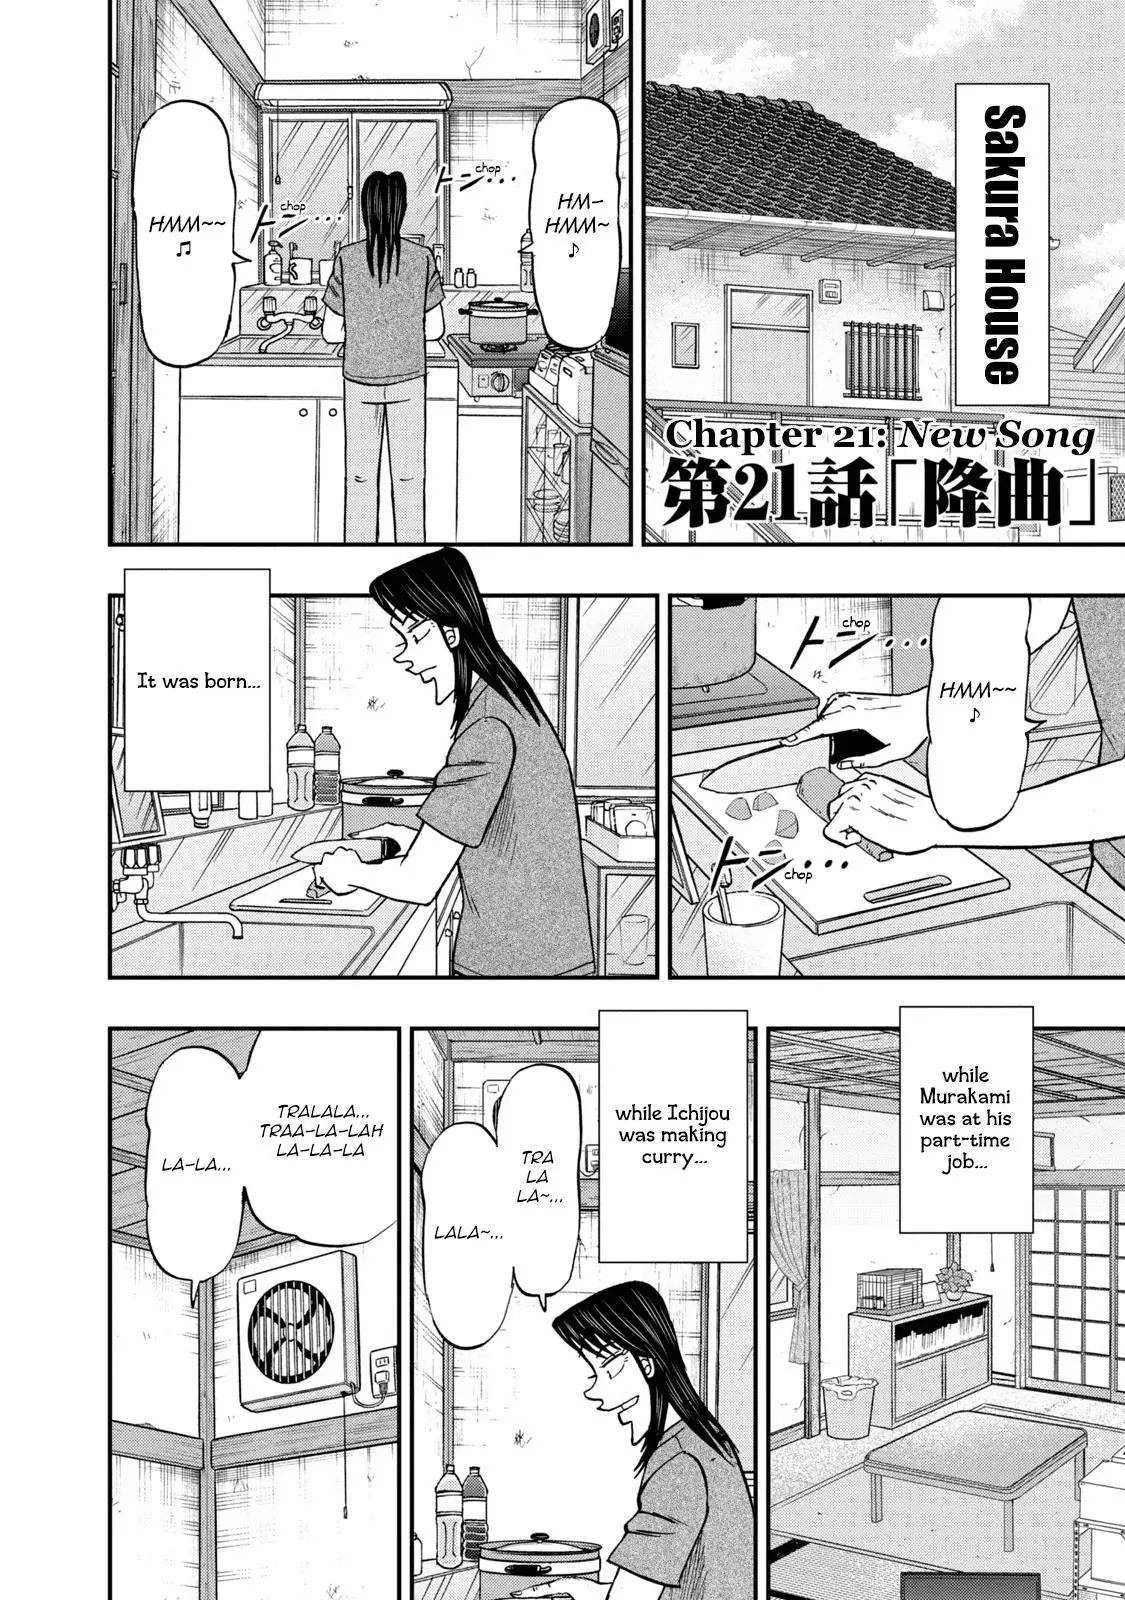 Life In Tokyo Ichijou - 21 page 2-7e9ec5d5